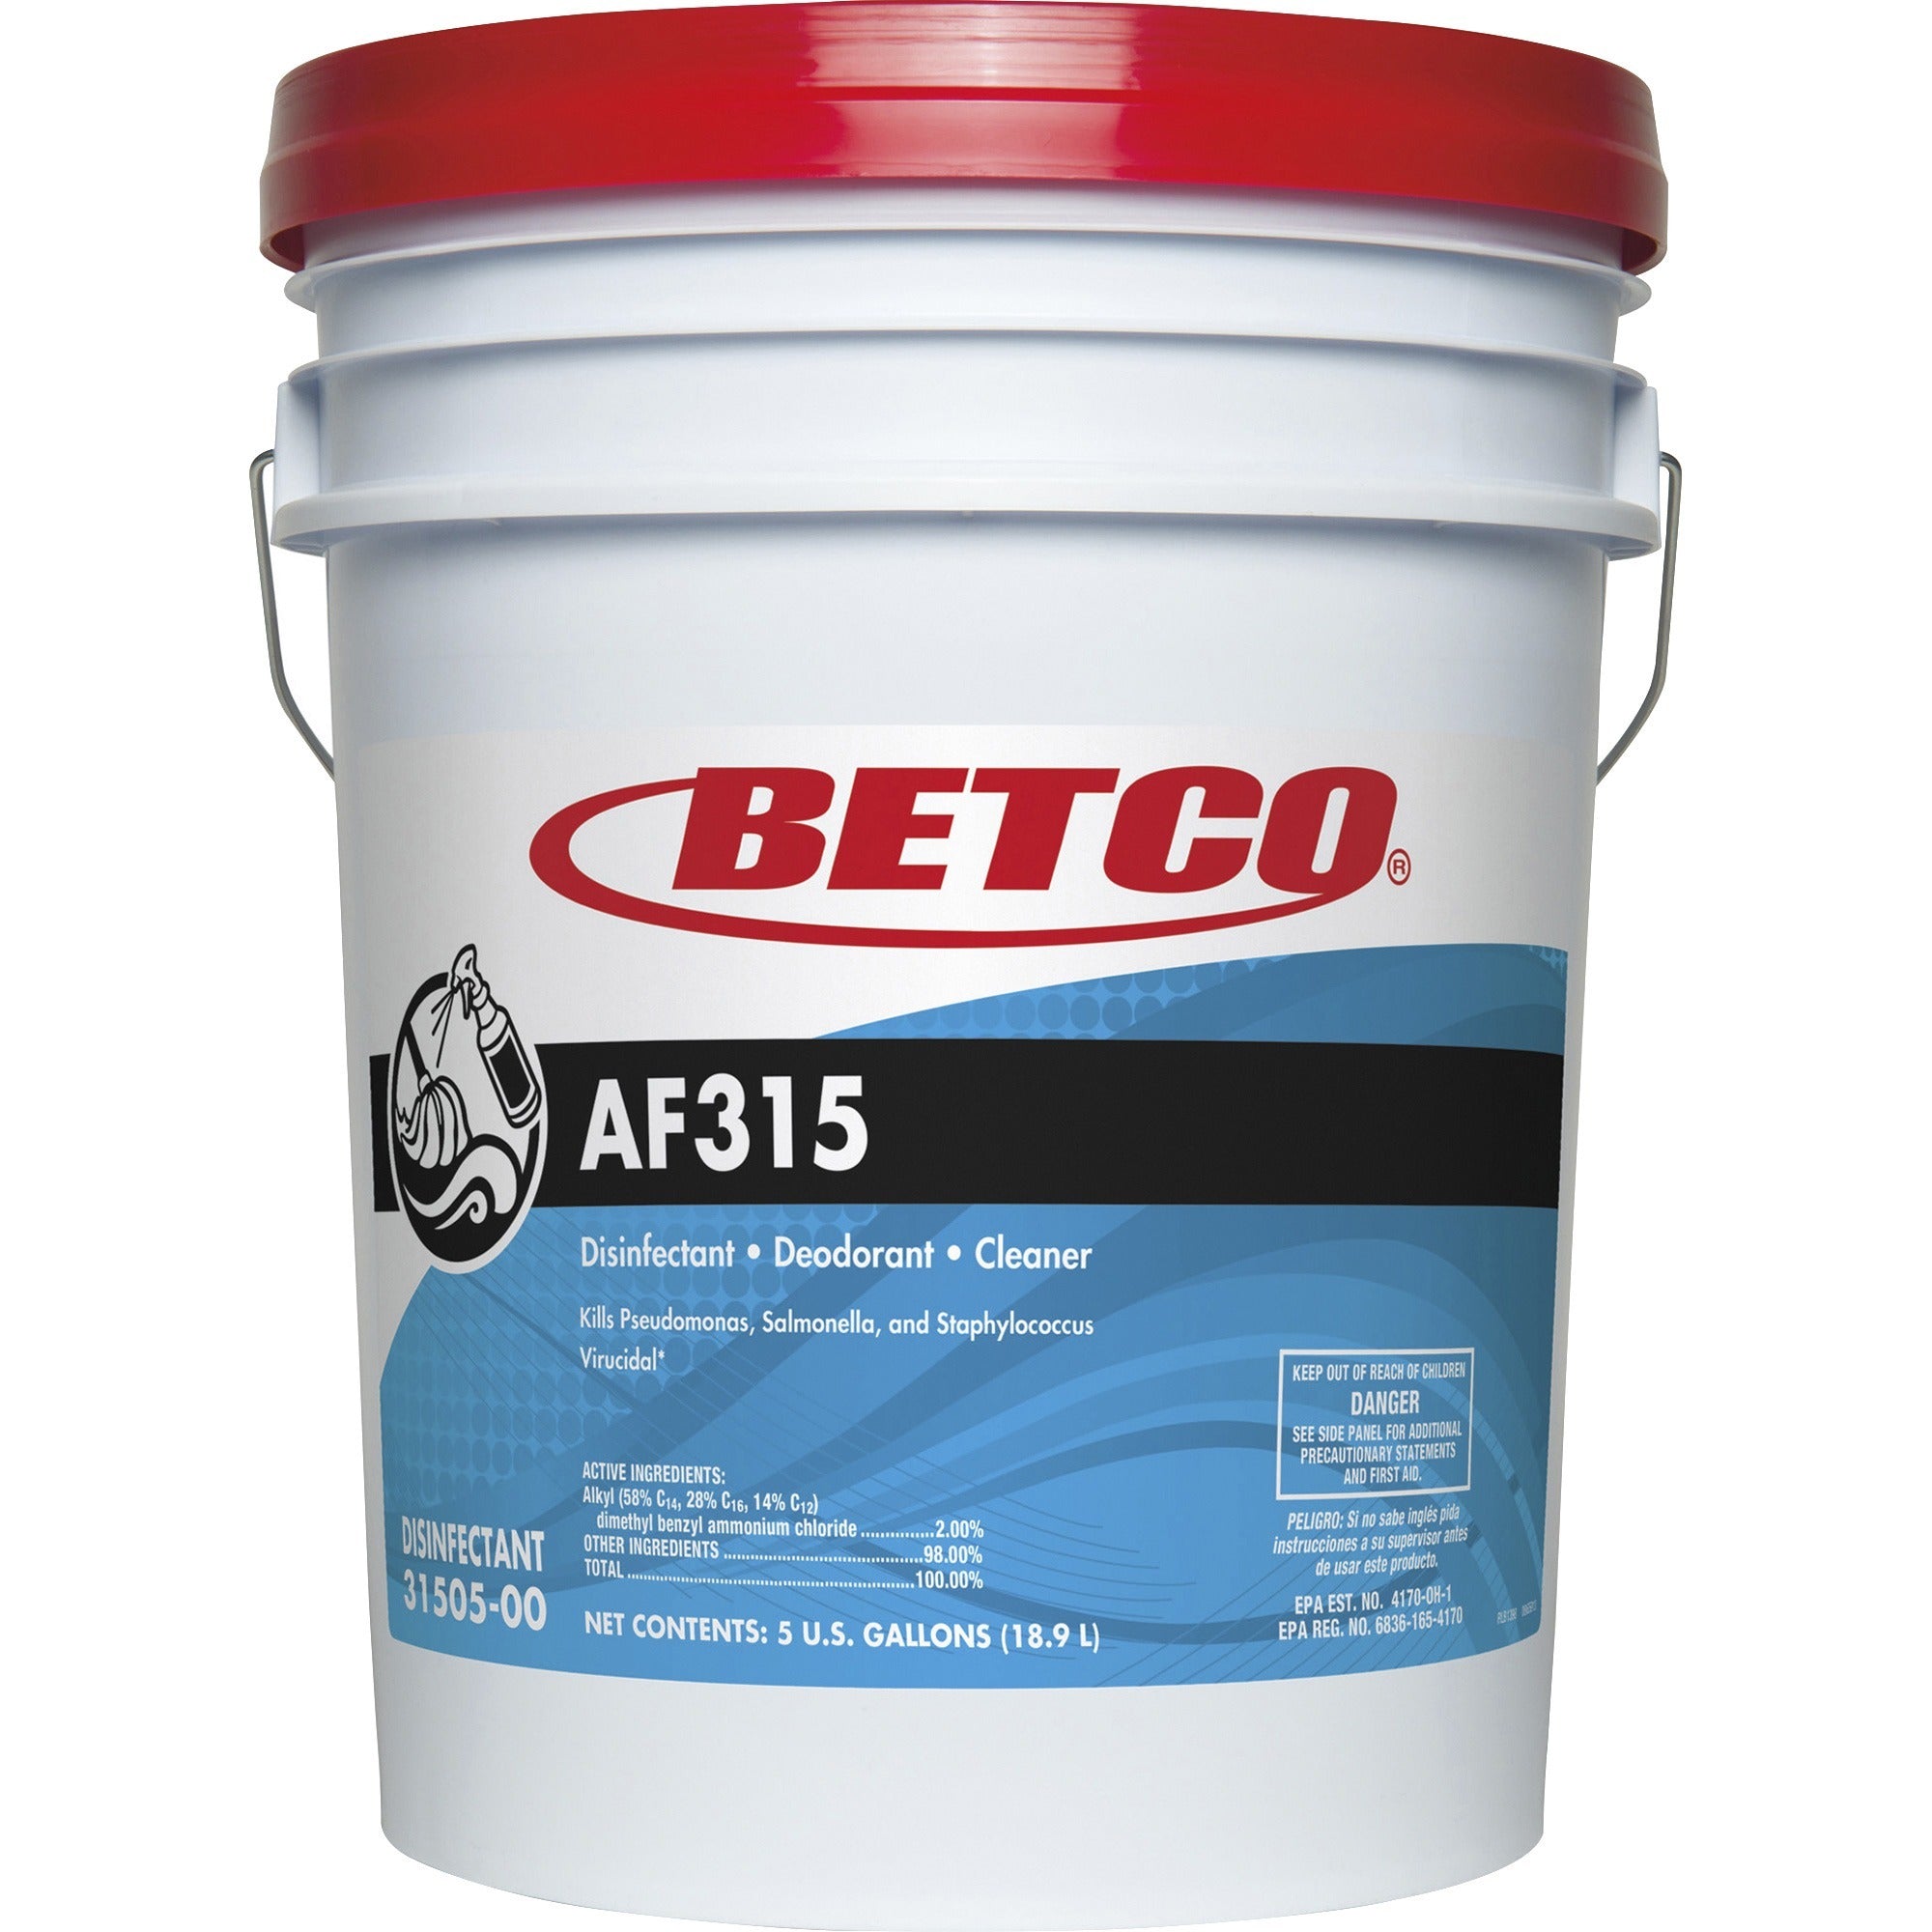 Betco AF315 Disinfectant Cleaner - 640 fl oz (20 quart) - Citrus Floral Scent - 1 / Carton - pH Neutral, Long Lasting, Deodorize - Turquoise - 1